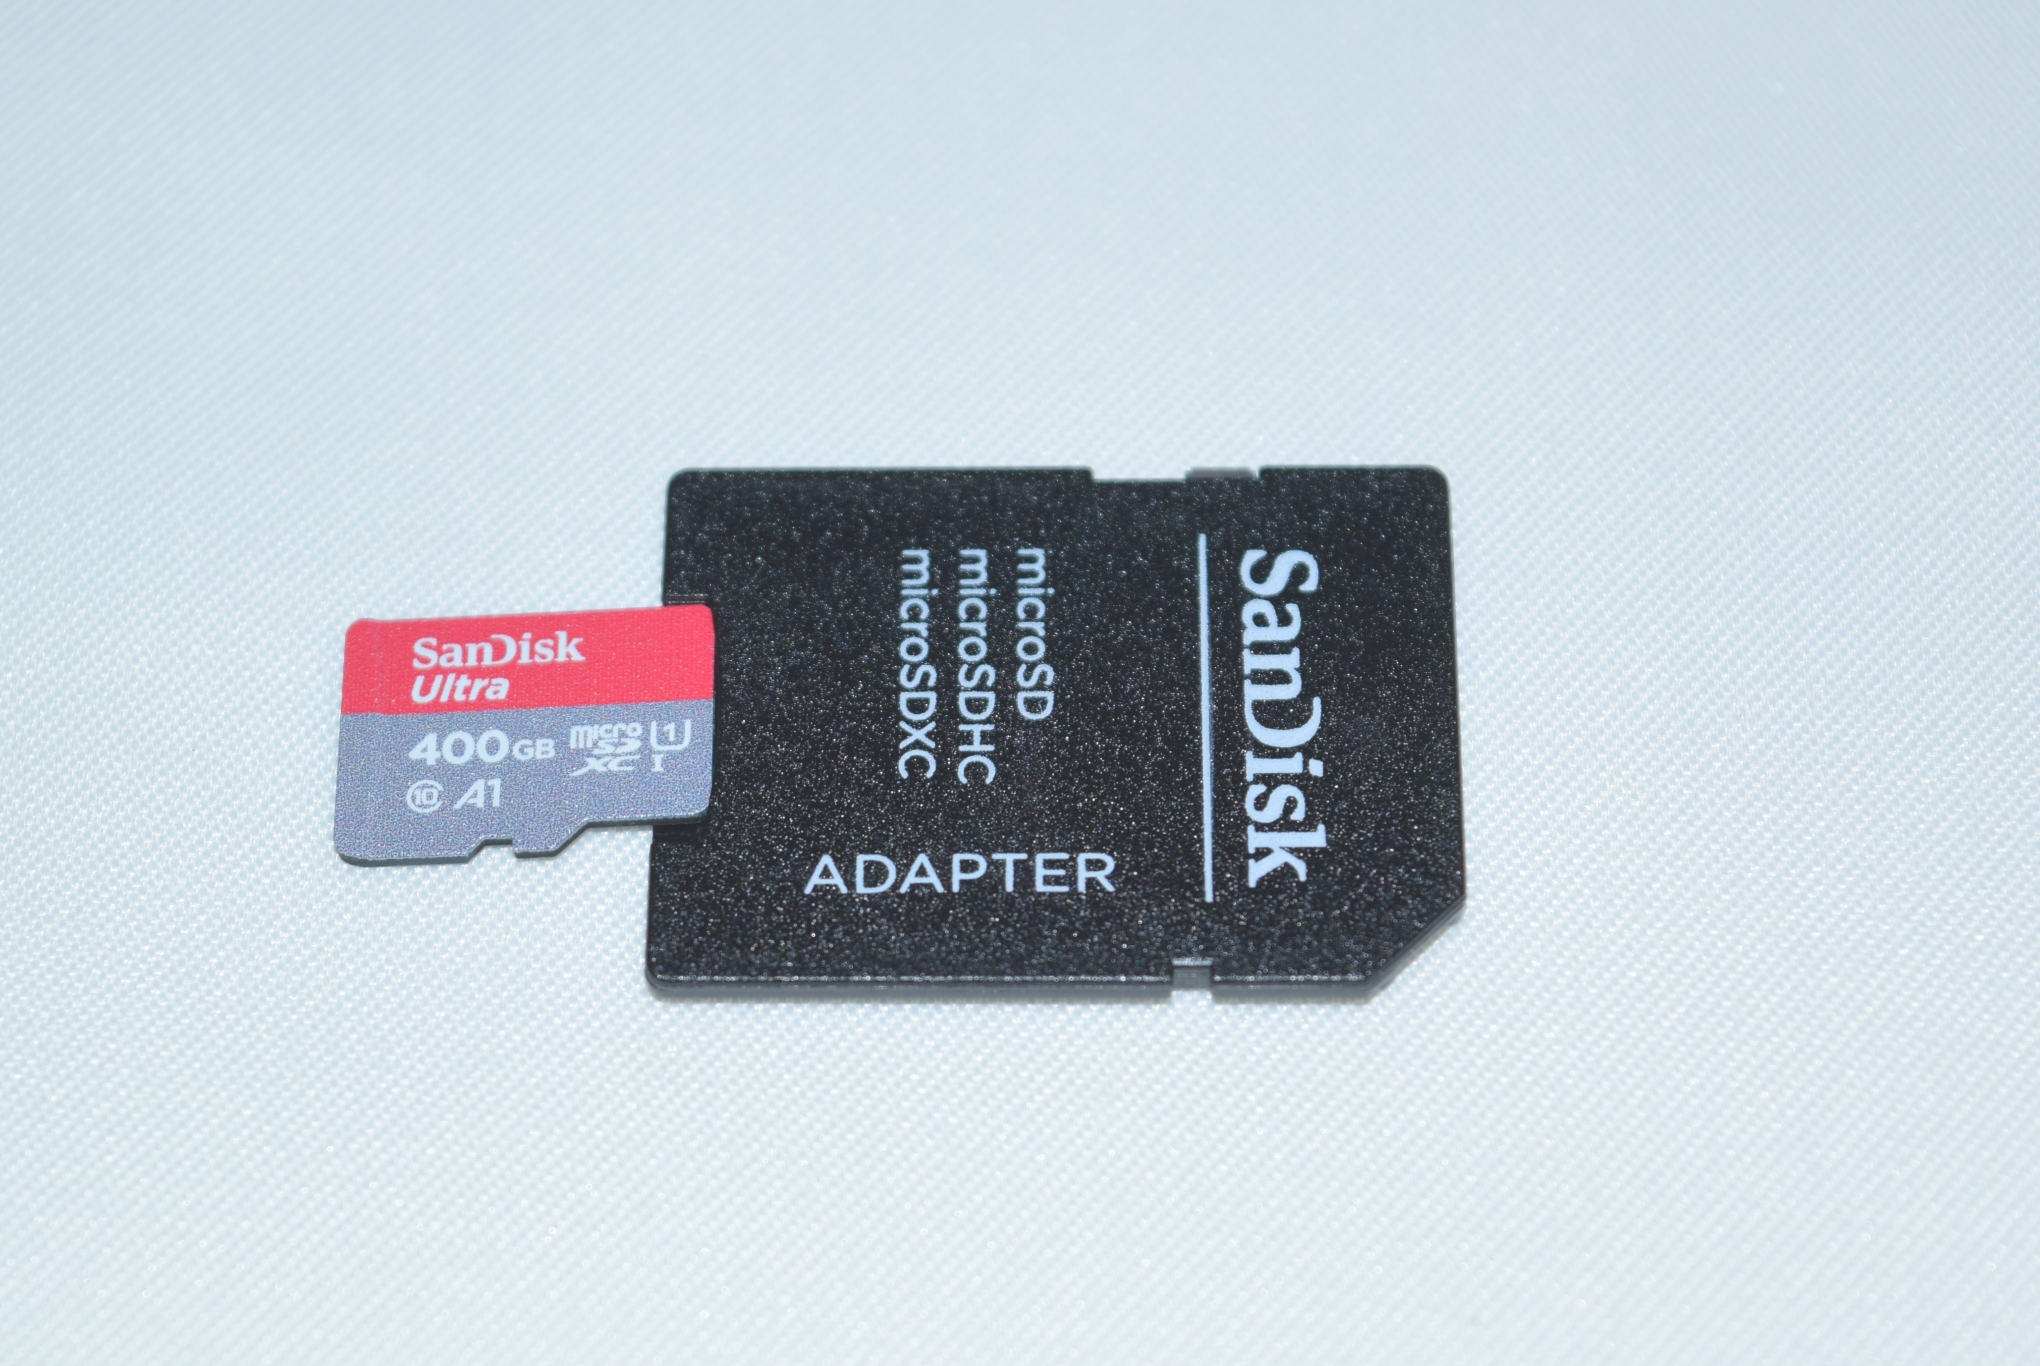 100MBs A1 U1 Works with SanDisk SanDisk Ultra 400GB MicroSDXC Verified for Alcatel 1V by SanFlash